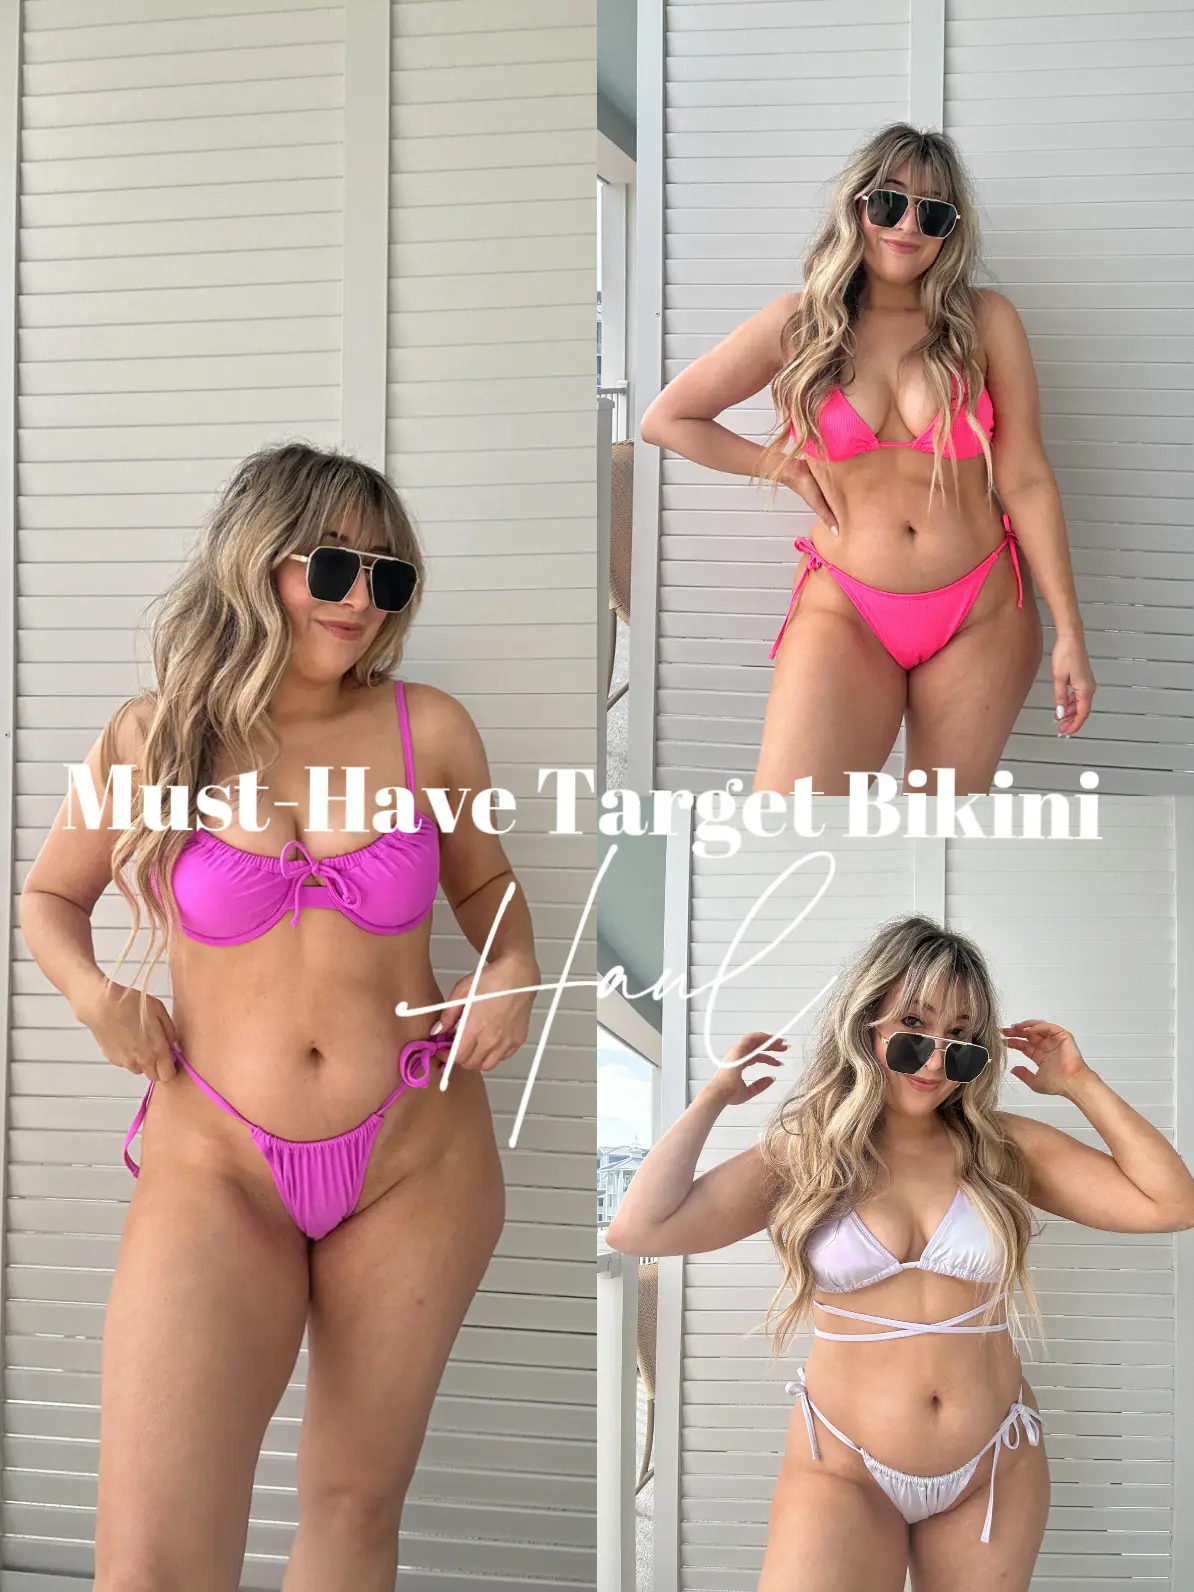 Must-Have Target Bikini Haul, Gallery posted by StephaniePernas